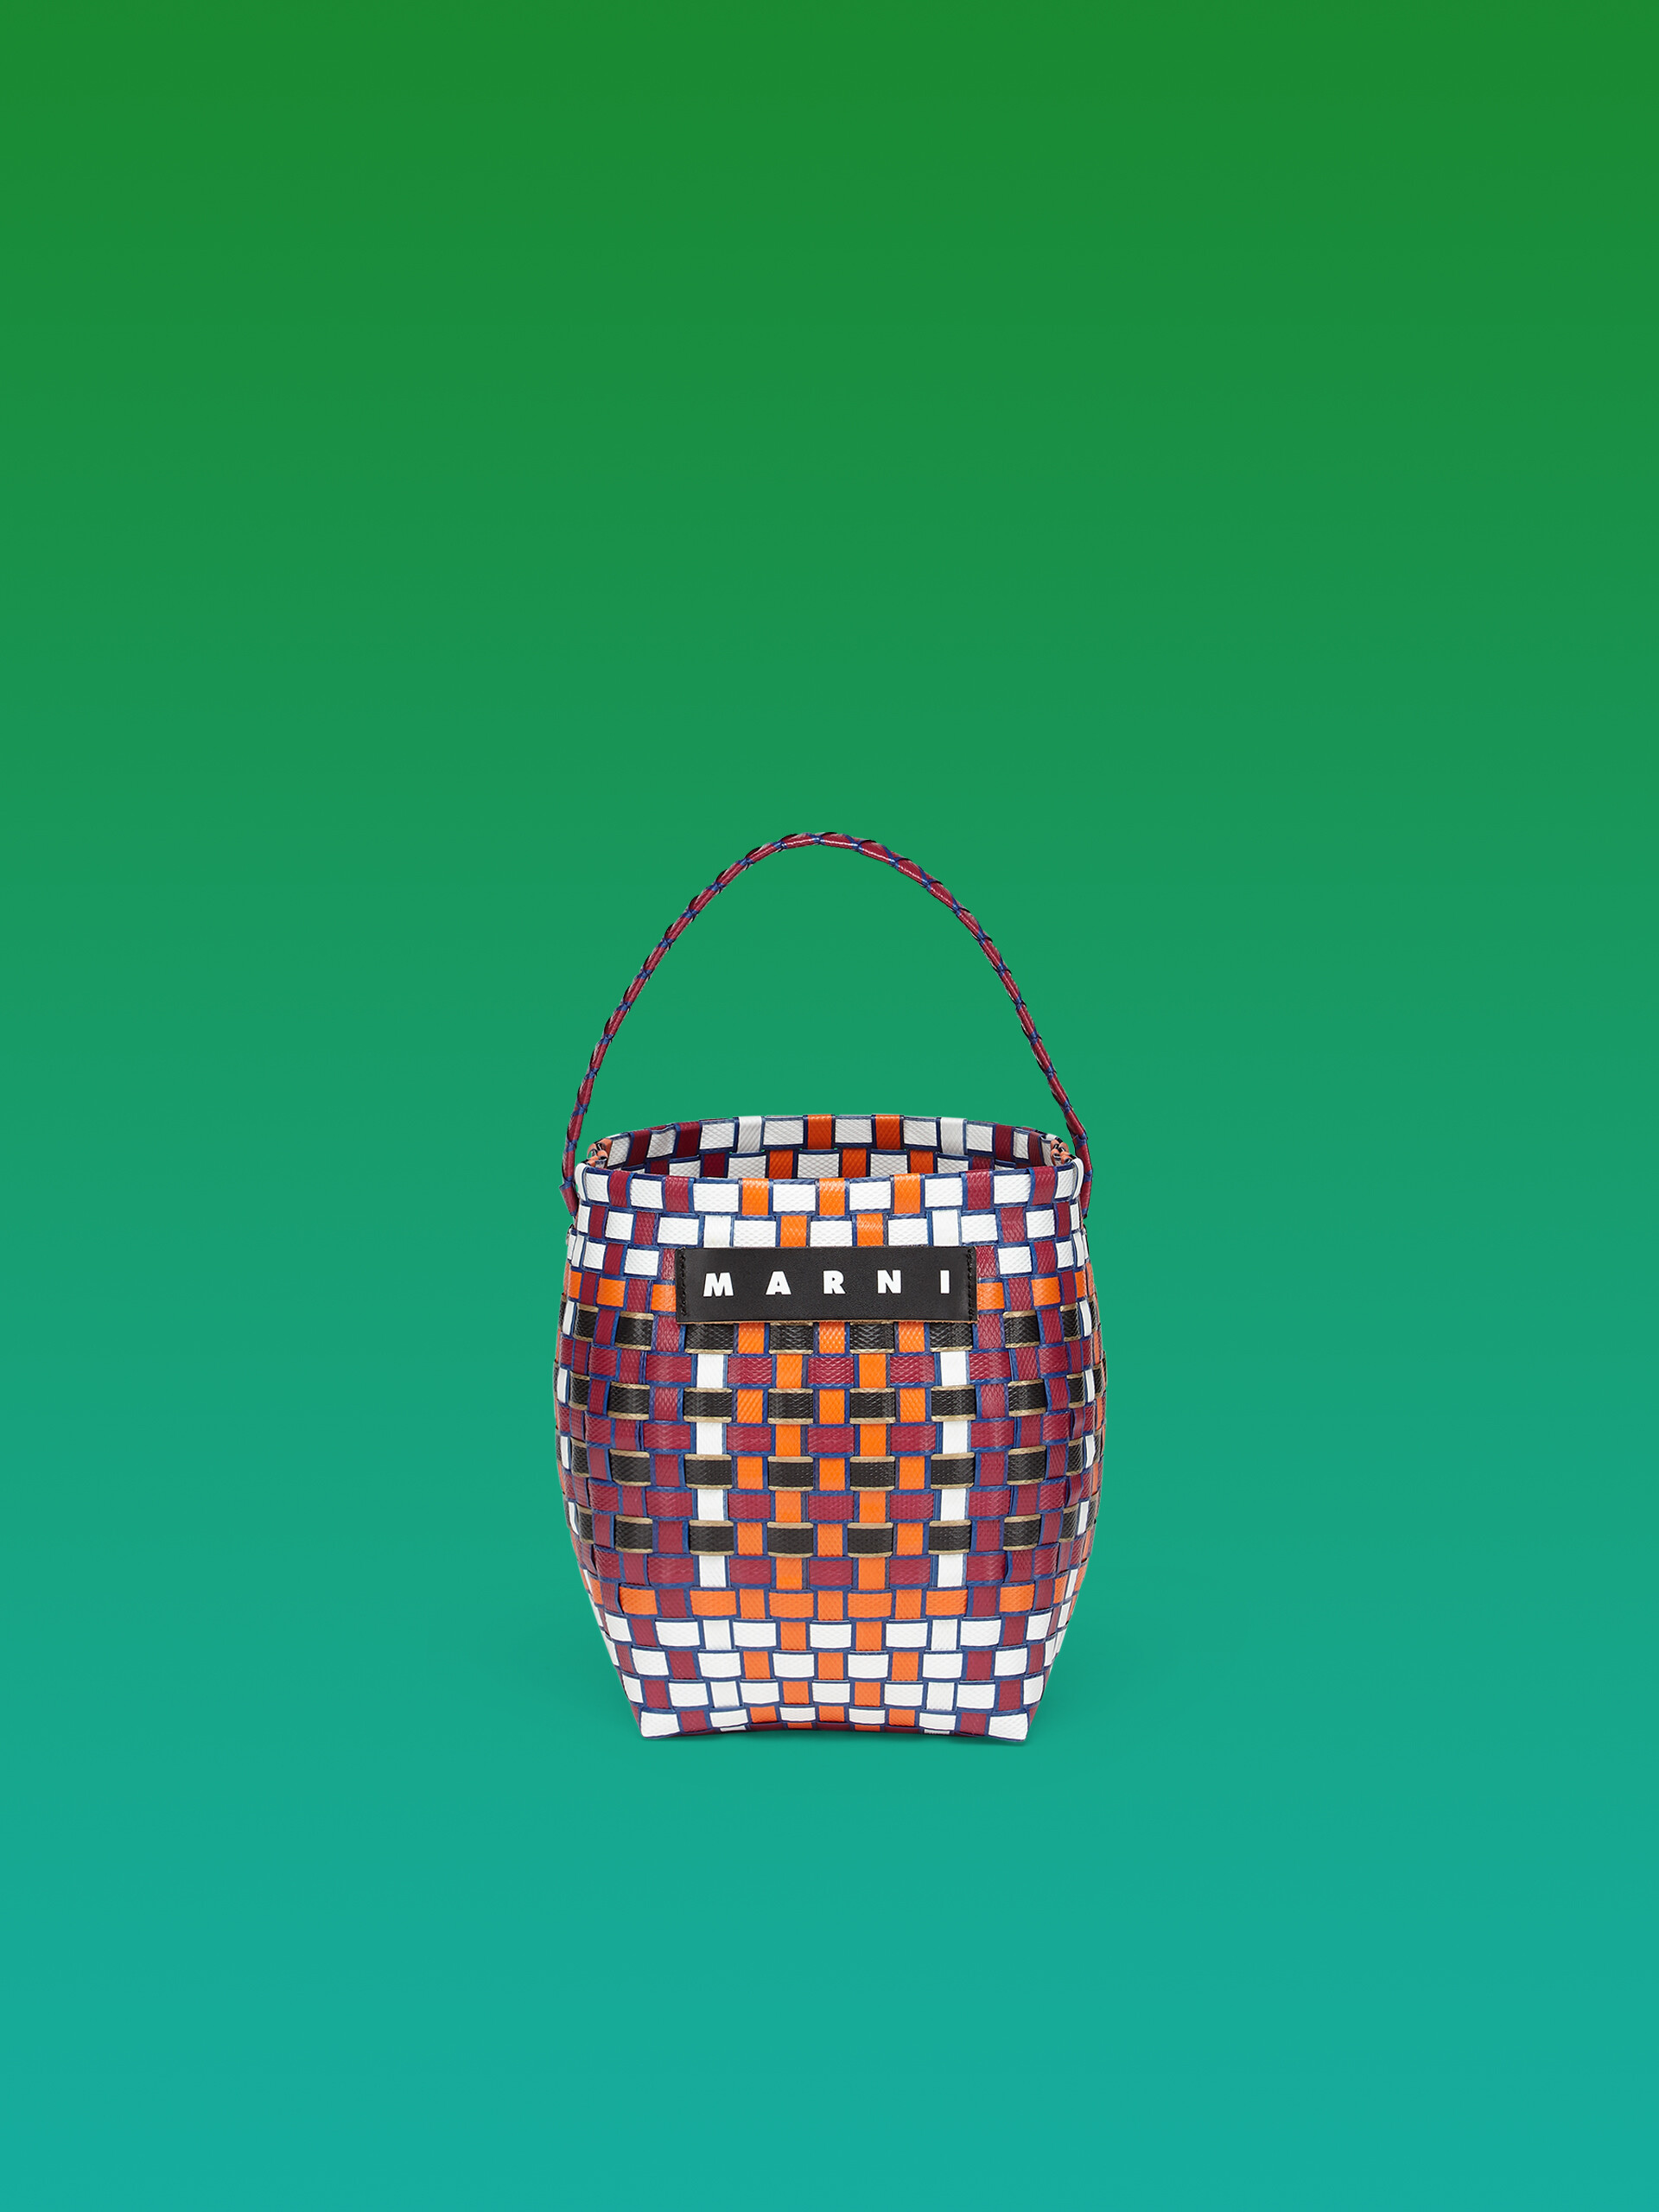 MARNI MARKET POD BASKET bag in orange woven material - Shopping Bags - Image 1